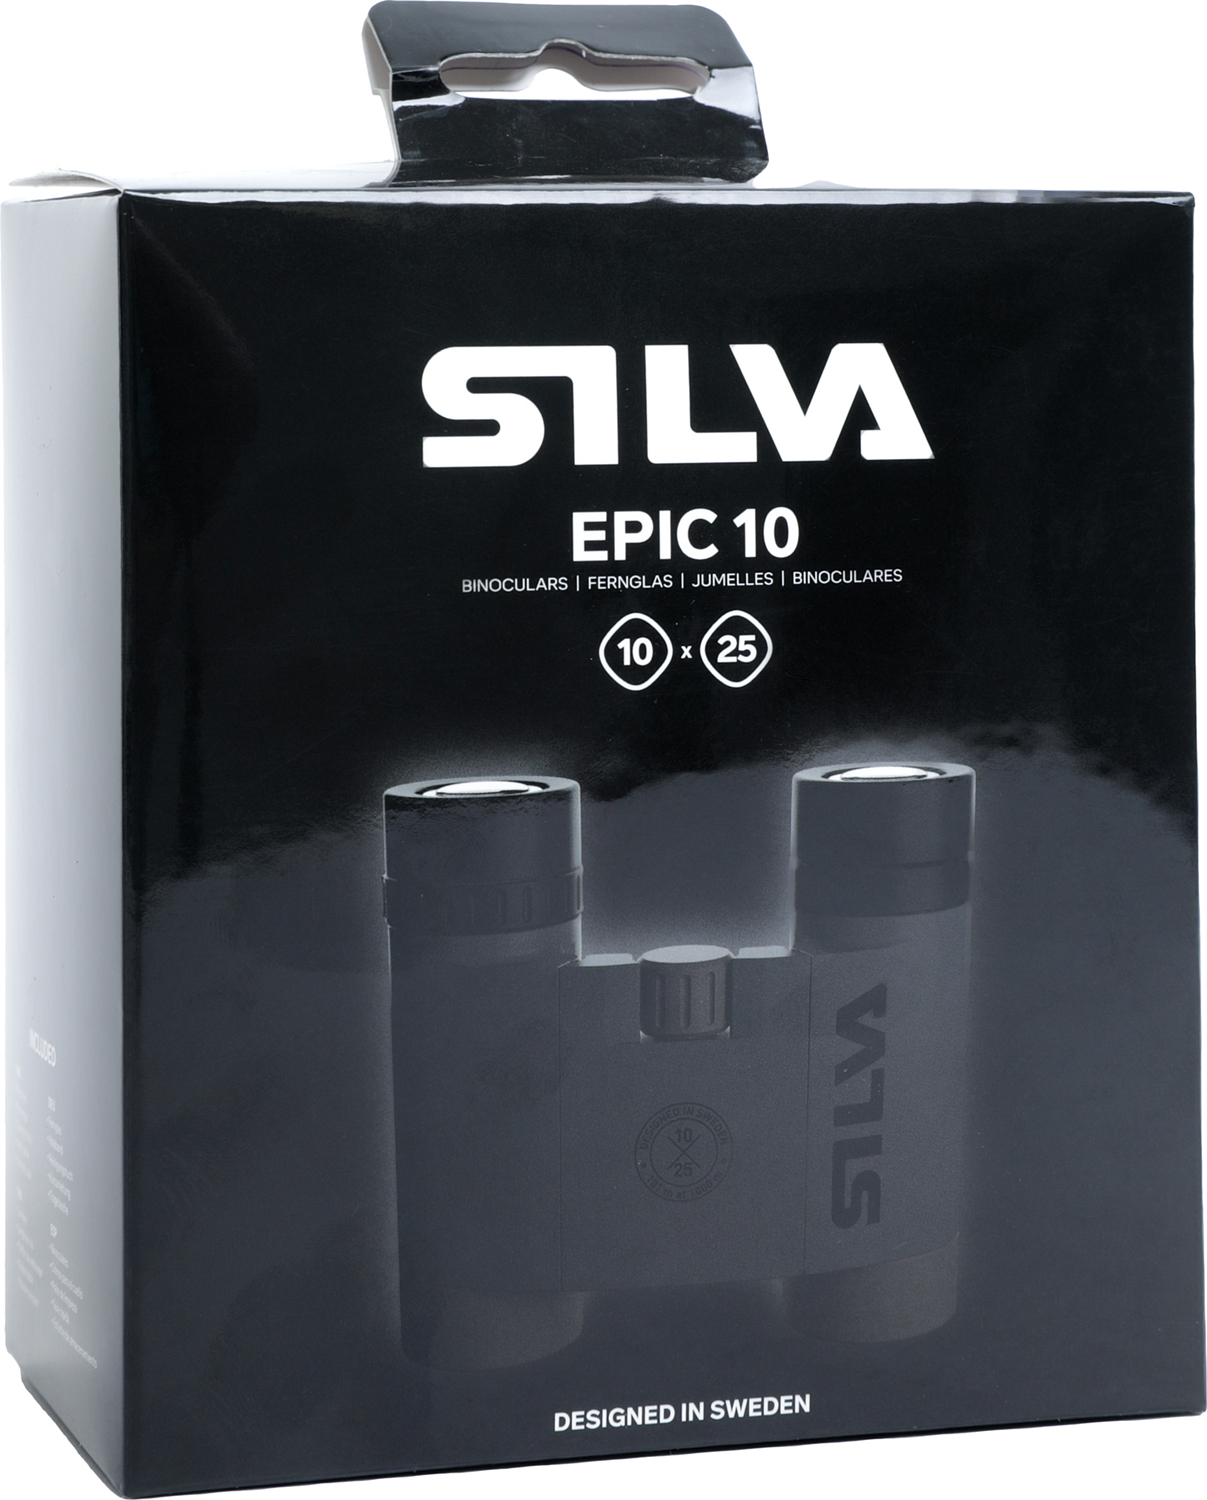 Бинокль Silva Binoculars Epic 10